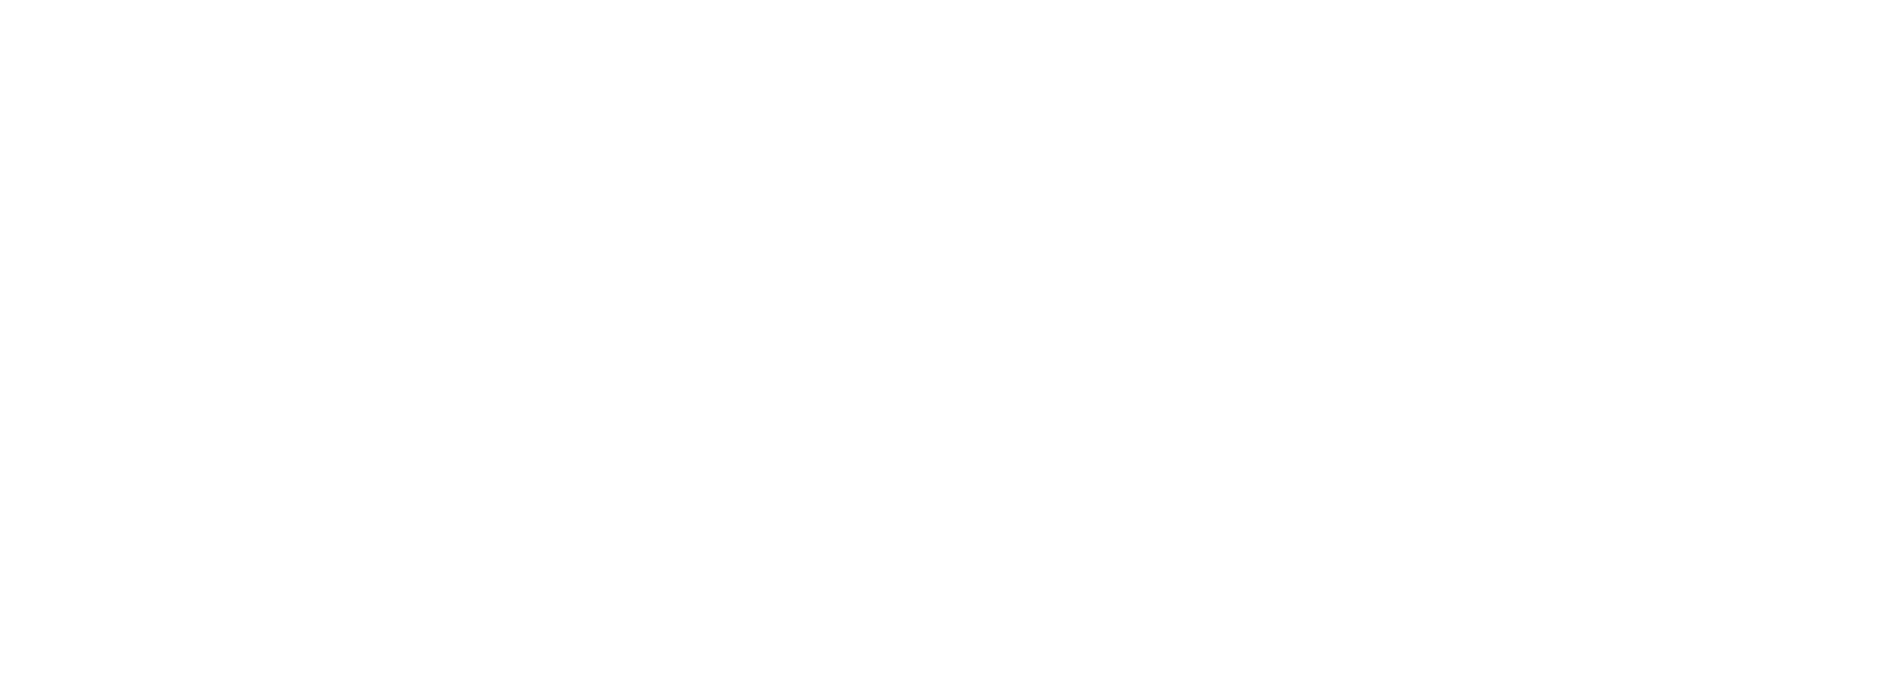 Greenplum Logo - Pivotal Greenplum Logo OneColorWhite